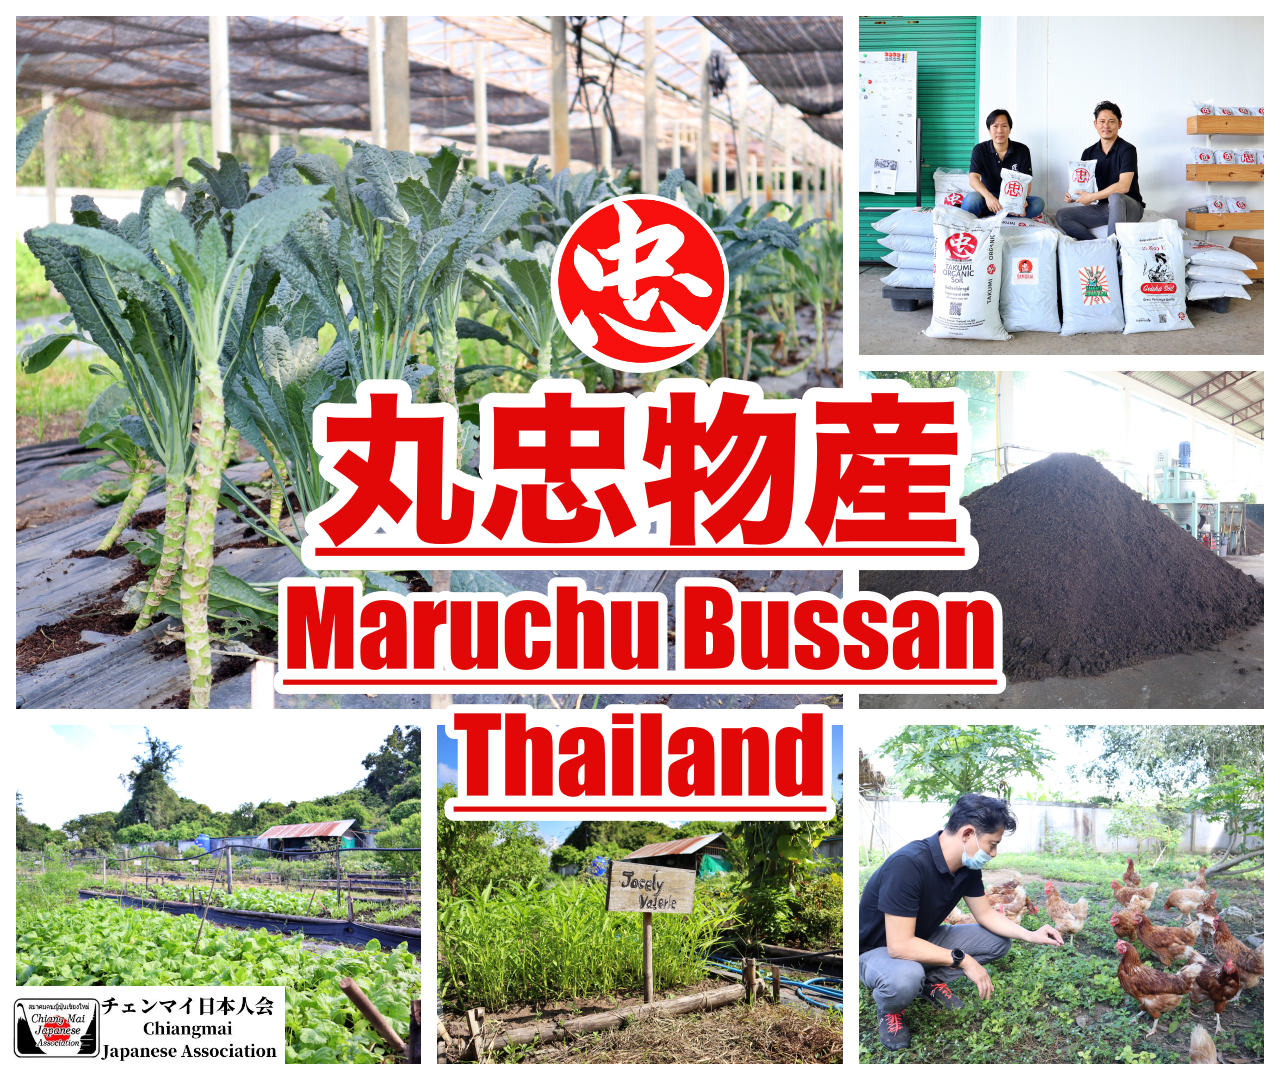 丸忠物産 (Maruchu Bussan Thailand)